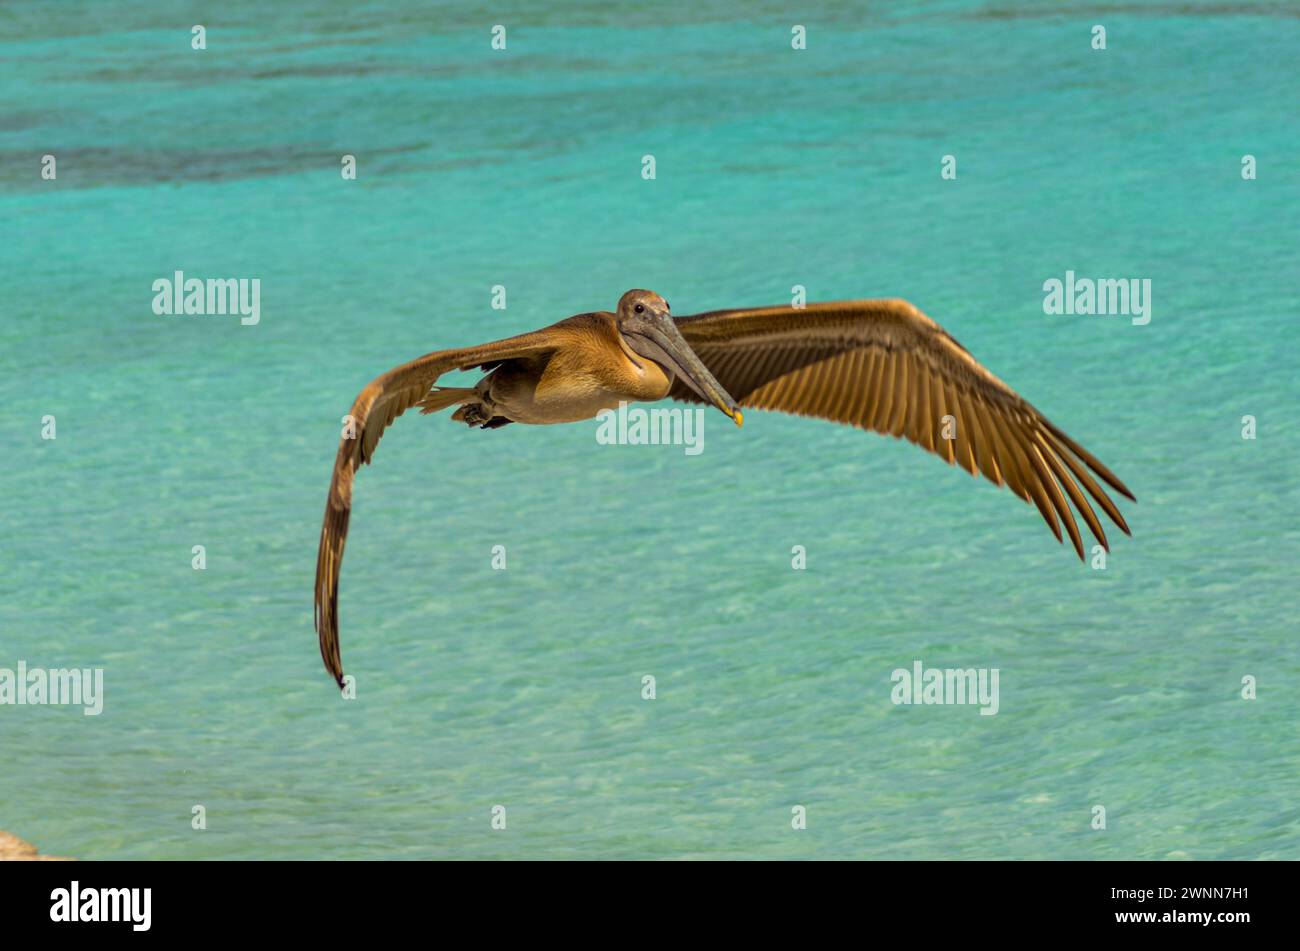 Un pélican brun planant au-dessus de l'eau bleu vif de l'océan. Wingspread grand ouvert. Banque D'Images